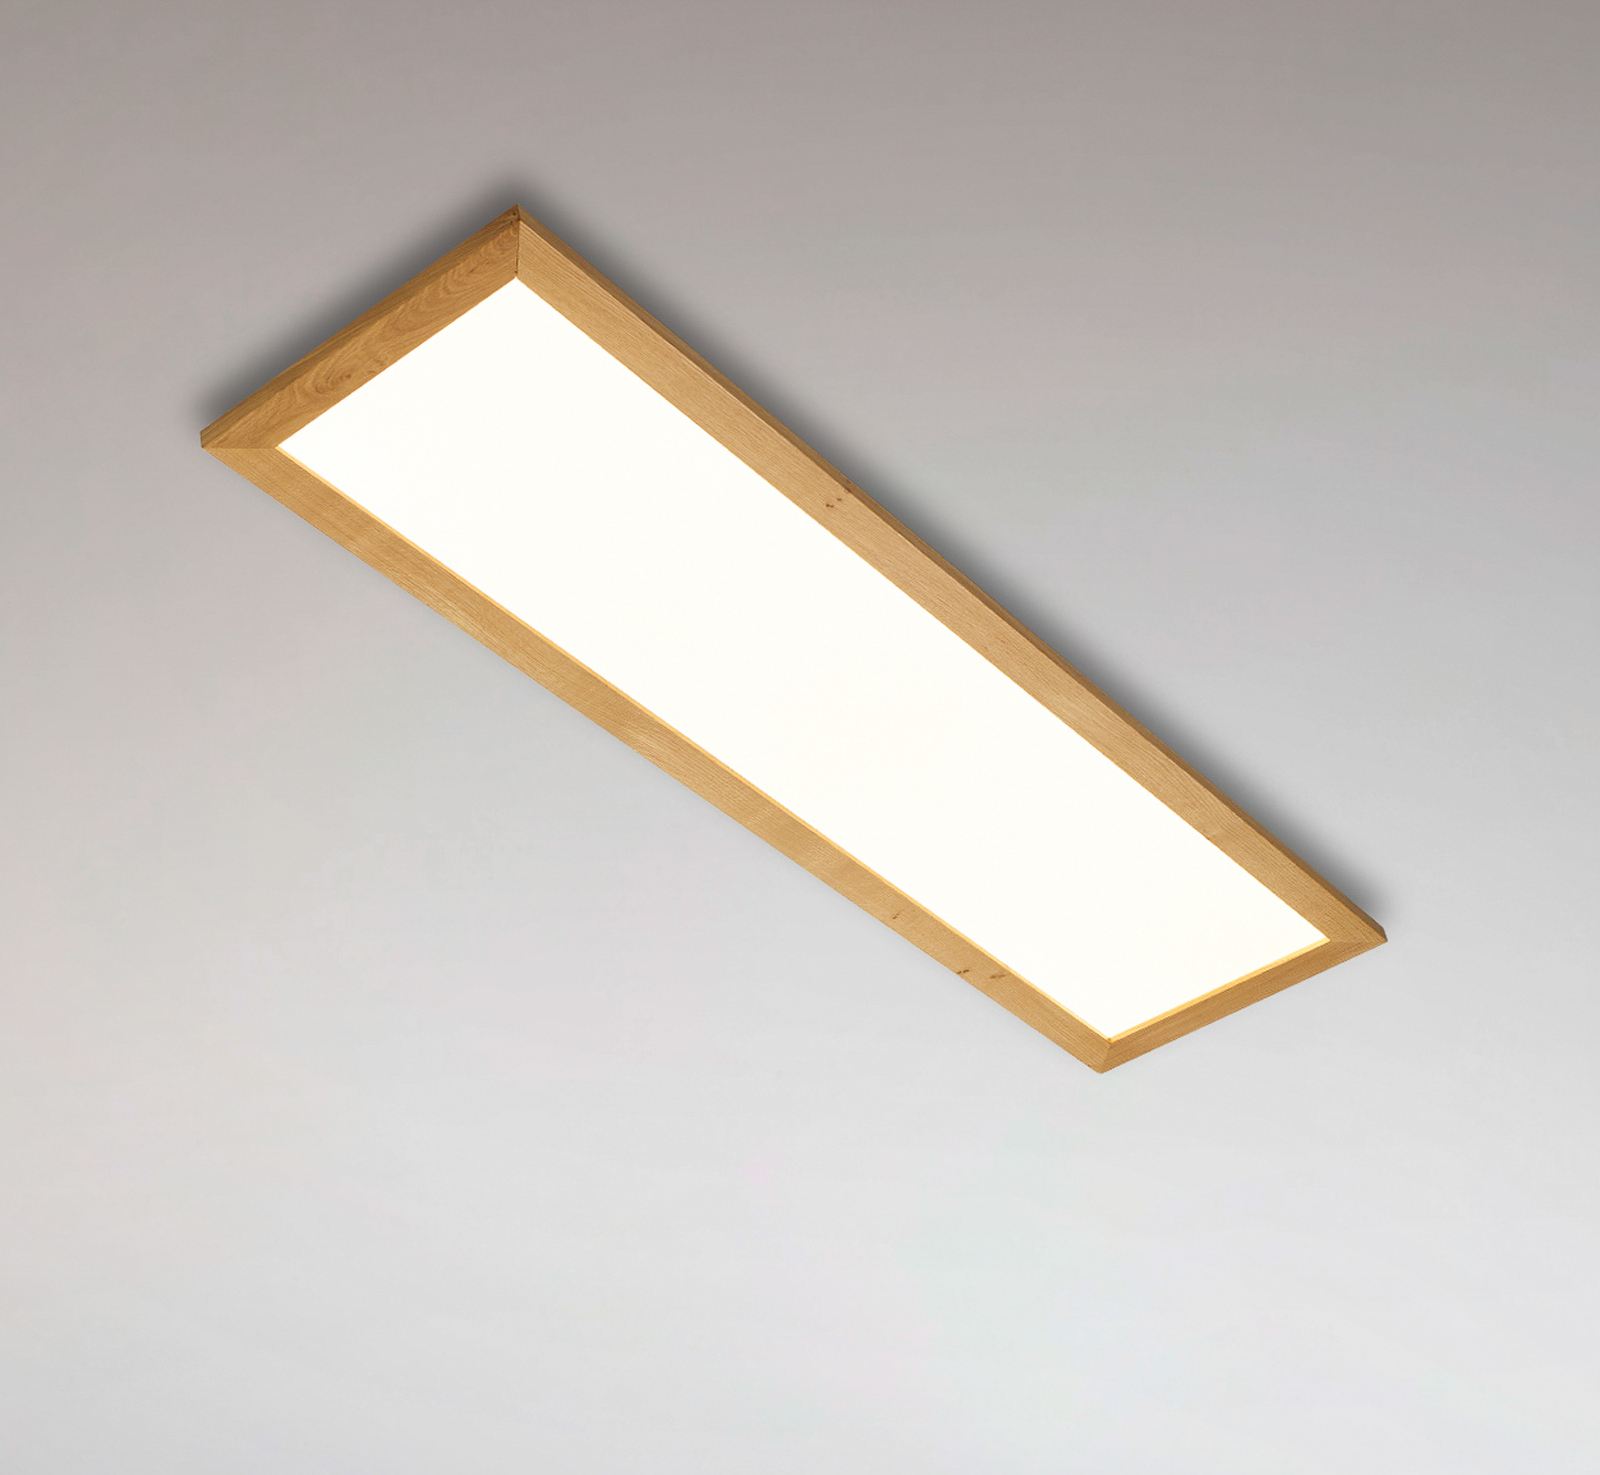 Lucande Aurinor LED-Panel Eiche natur 125 cm